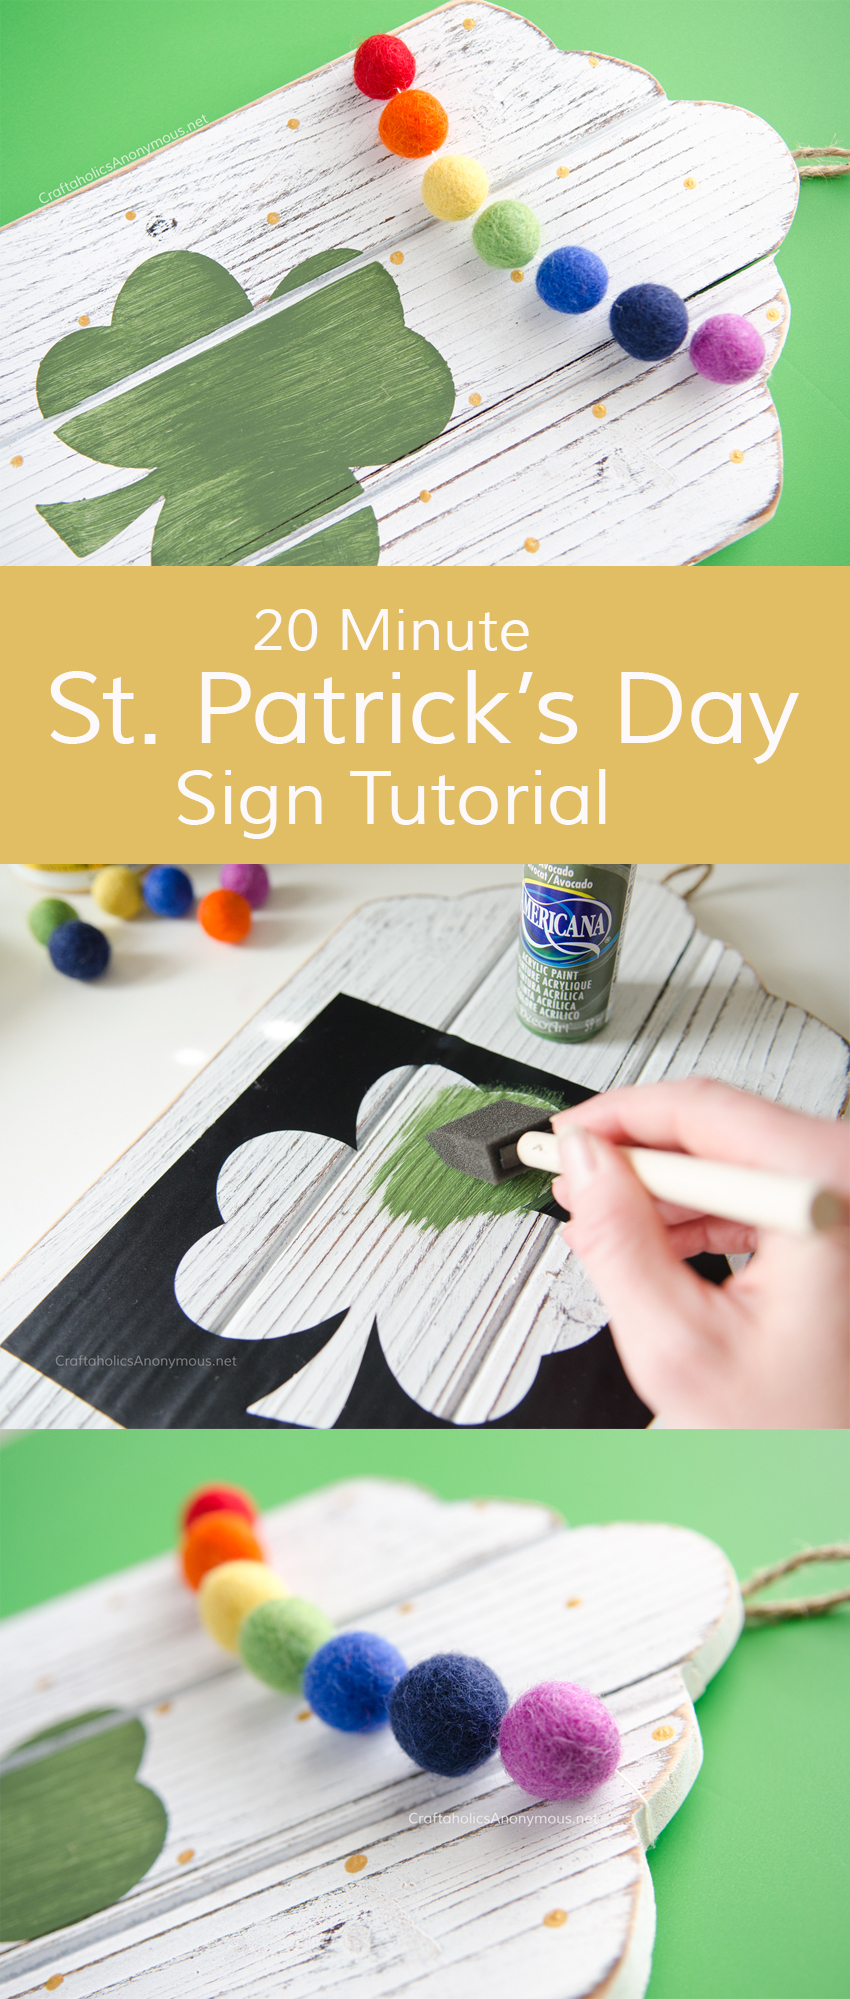 DIY St Patrick's Day sign tutorial :: Easy craft idea decor